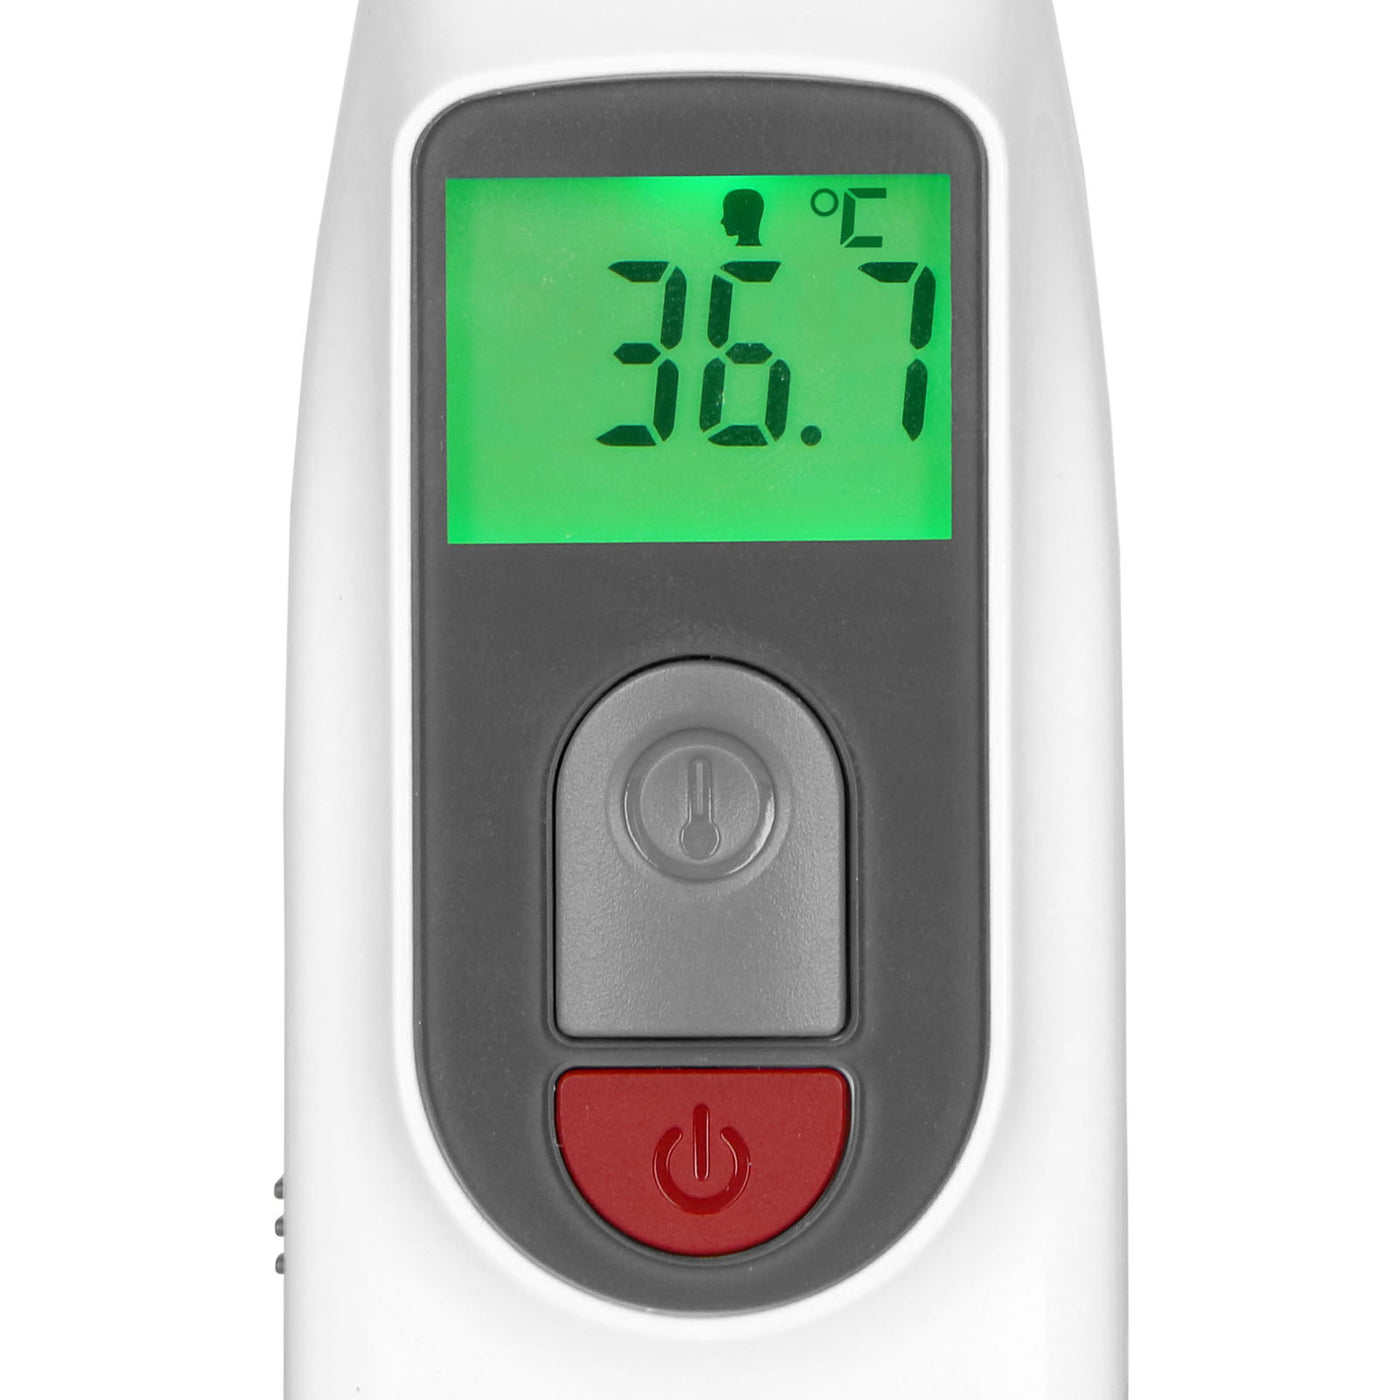 Alecto BC38 - Voorhoofdthermometer, infrarood, wit